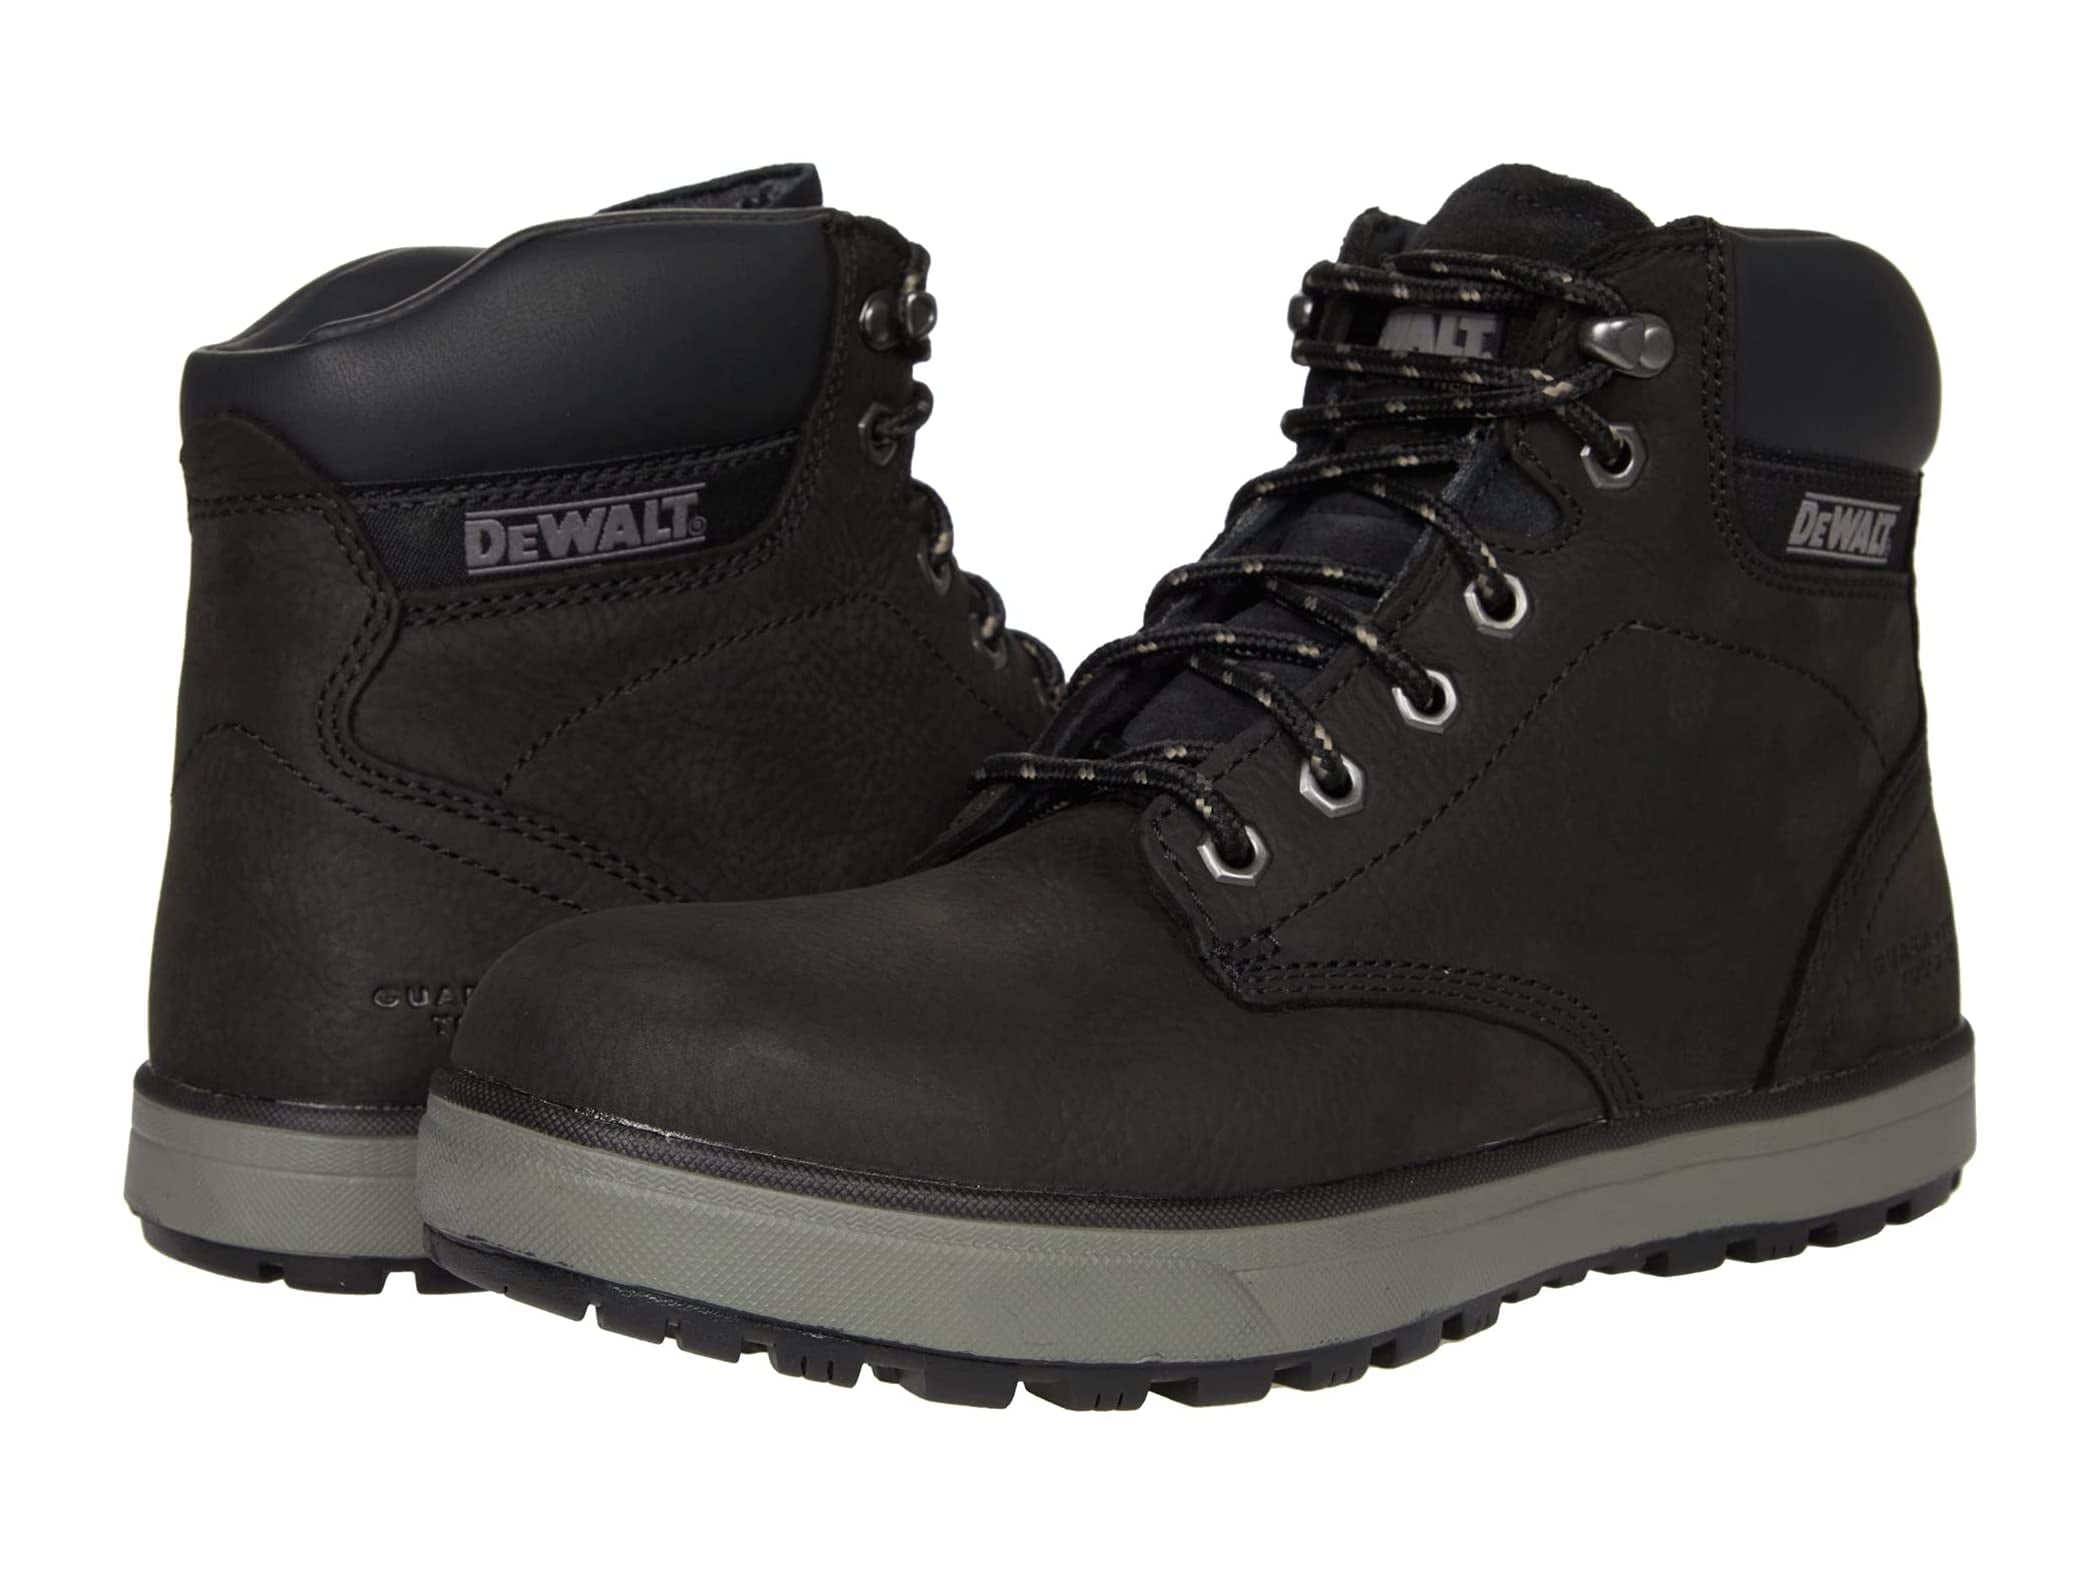 Dewalt DXWP10007 PLASMA Black Steel Toe Men's Work Boot - Walmart.com